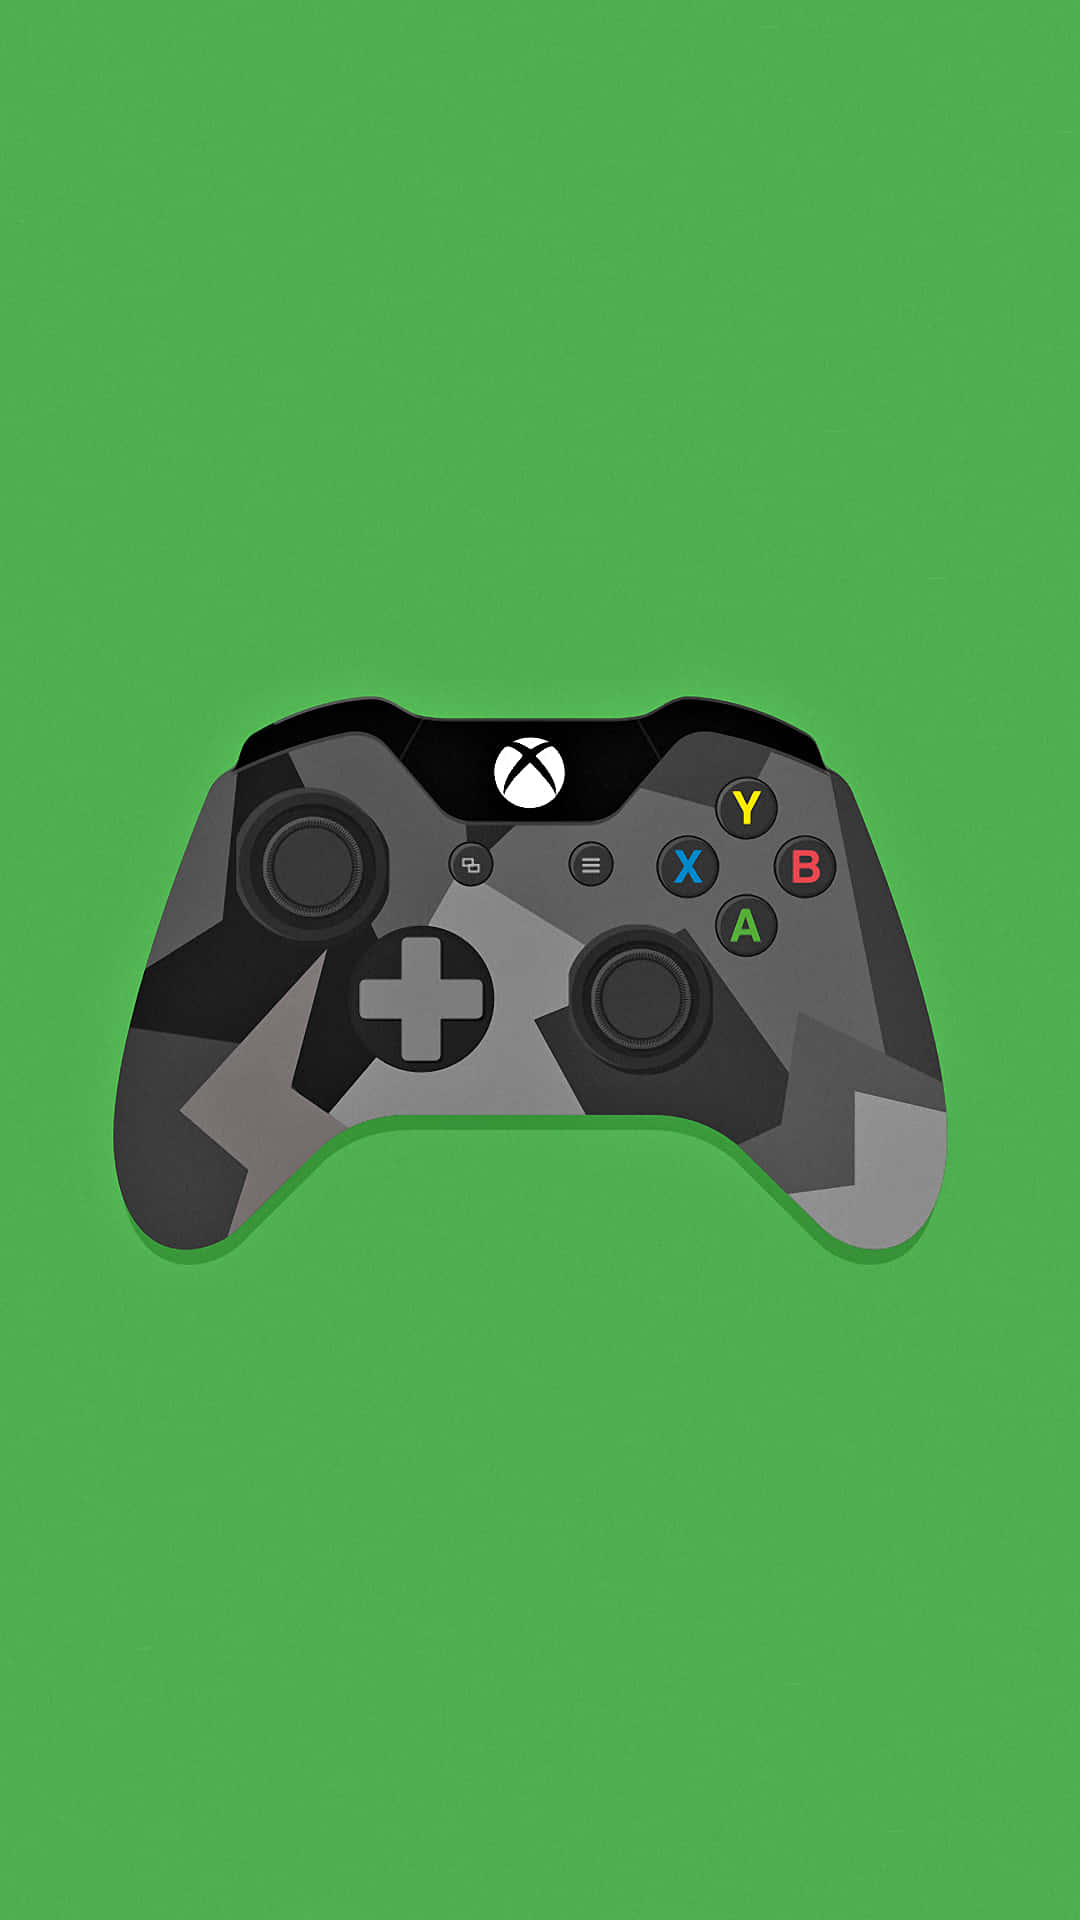 Controllerxbox One - Controller Xbox One - Controller Xbox One - Controller Xbox One - Controller Xbox One Sfondo